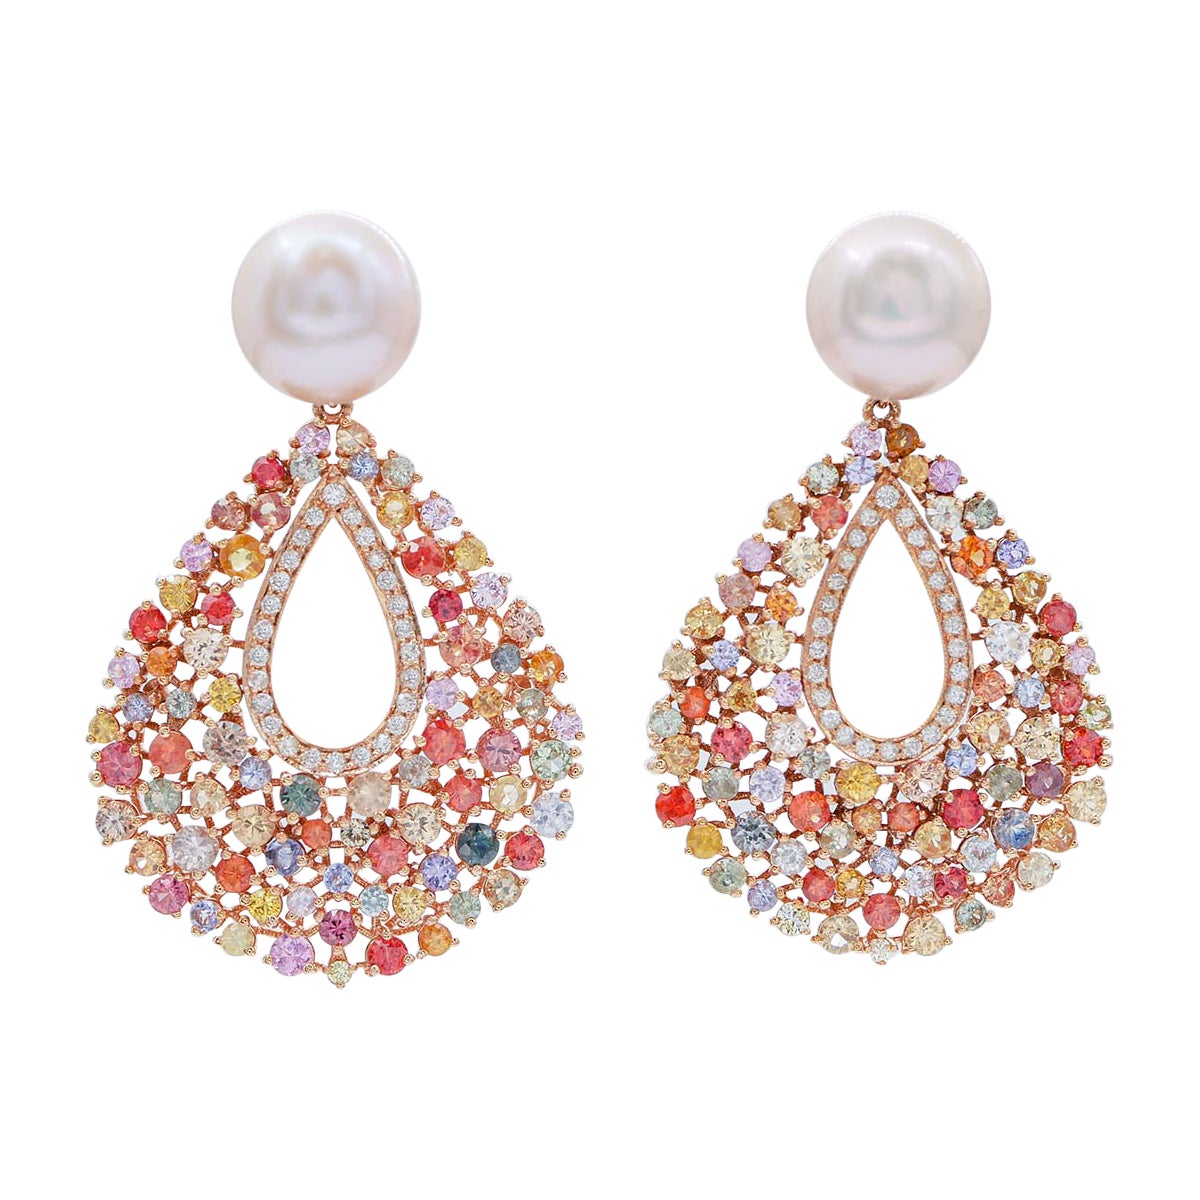 Ohrringe aus 14 Karat Roségold mit rosa Perlen, Tansanit, mehrfarbigen Saphiren, Diamanten